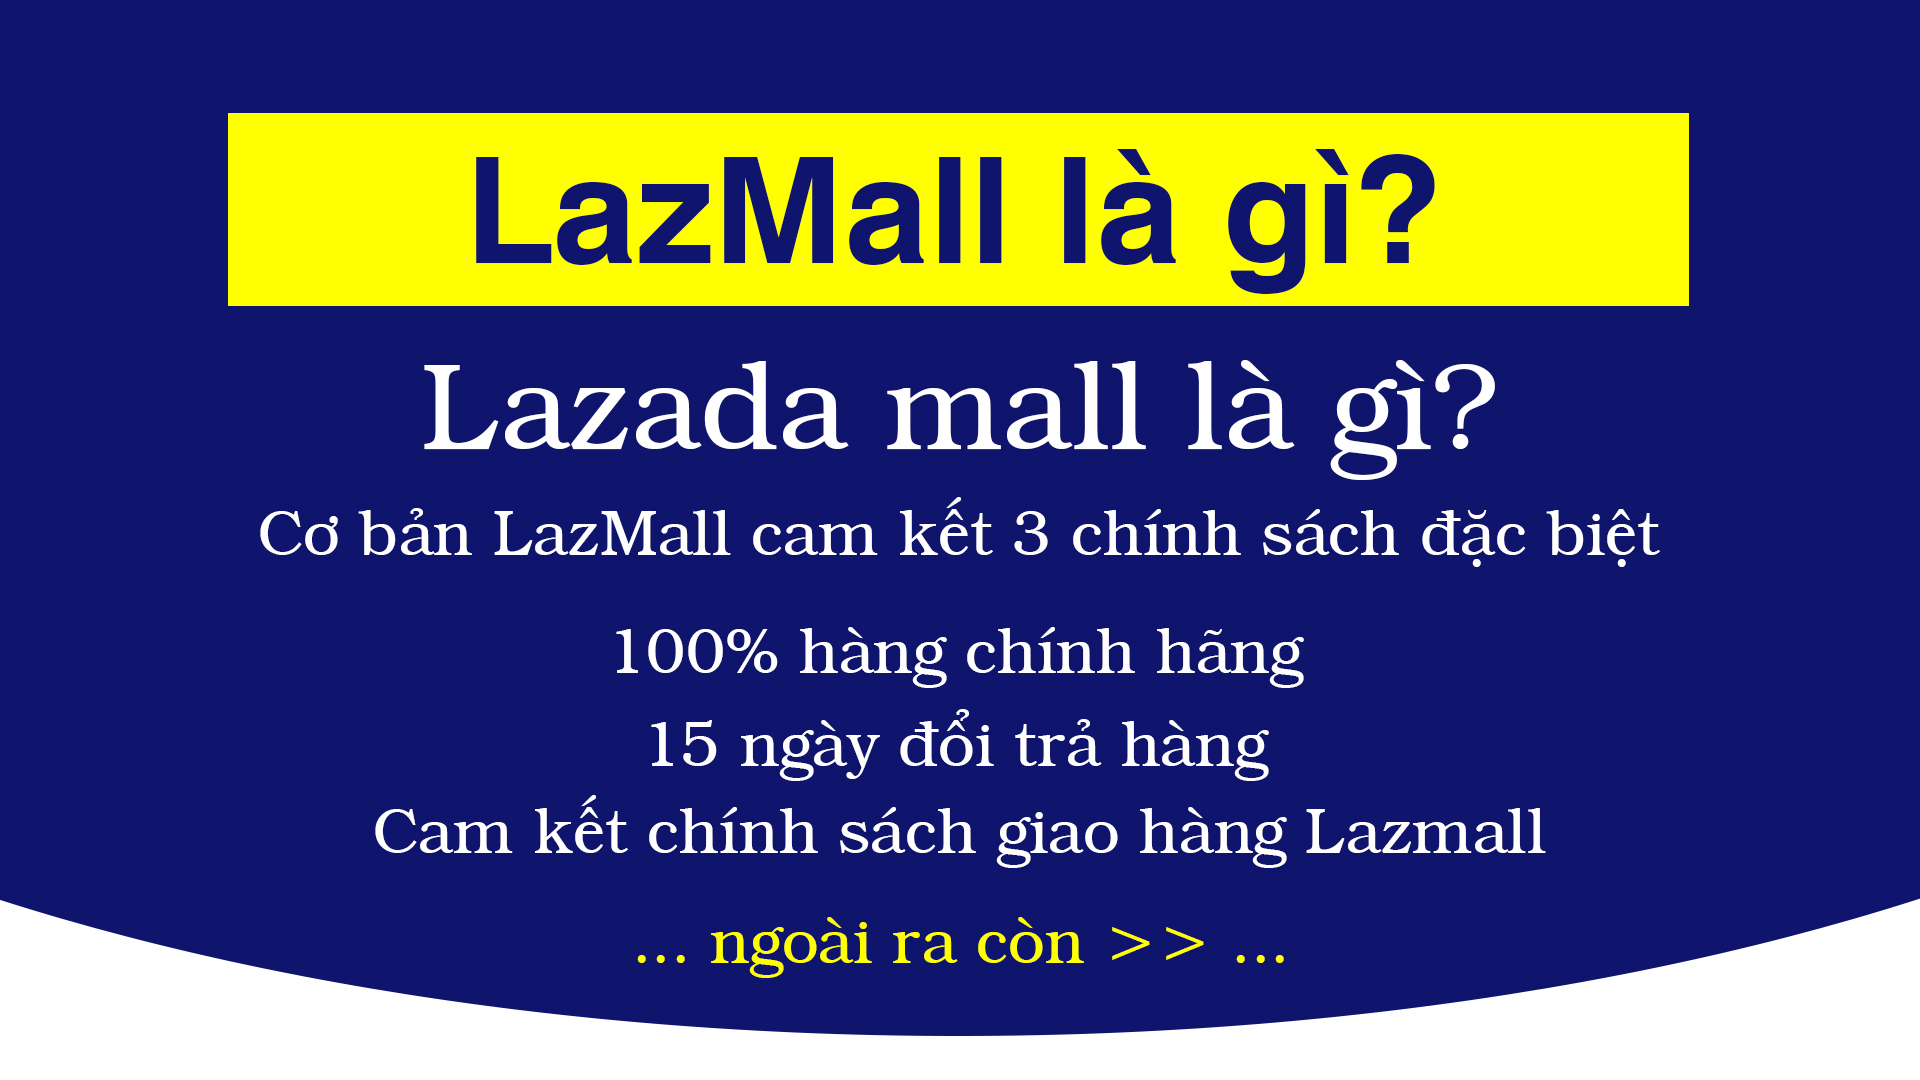 LazMall lÃ  gÃ¬? Lazada Mall lÃ  gÃ¬?